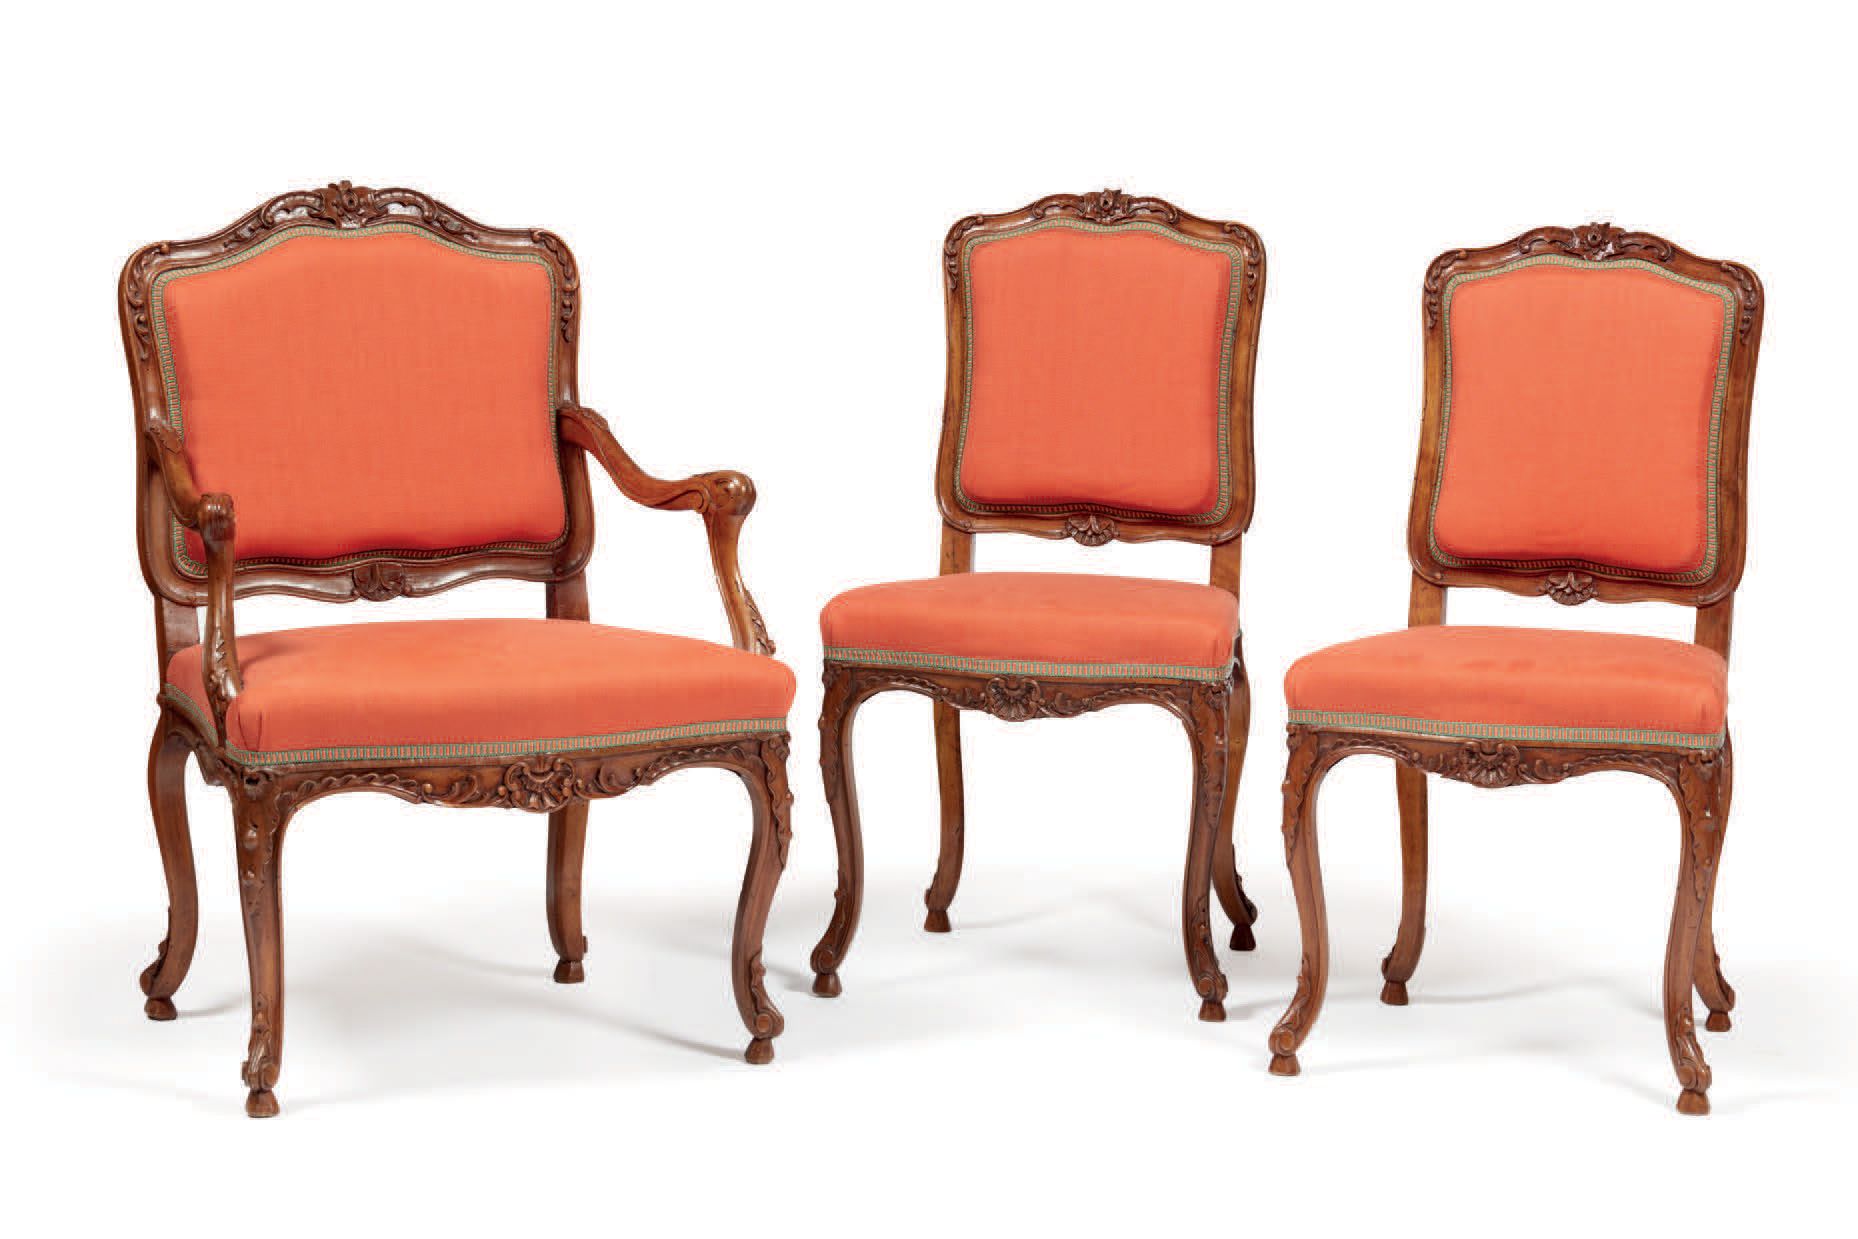 Null 一把扶手椅和两把用红色/橙色织物覆盖的胡桃木雕刻椅子，18世纪（修复）
Un fauteuil et deux chaises en noyer sc&hellip;